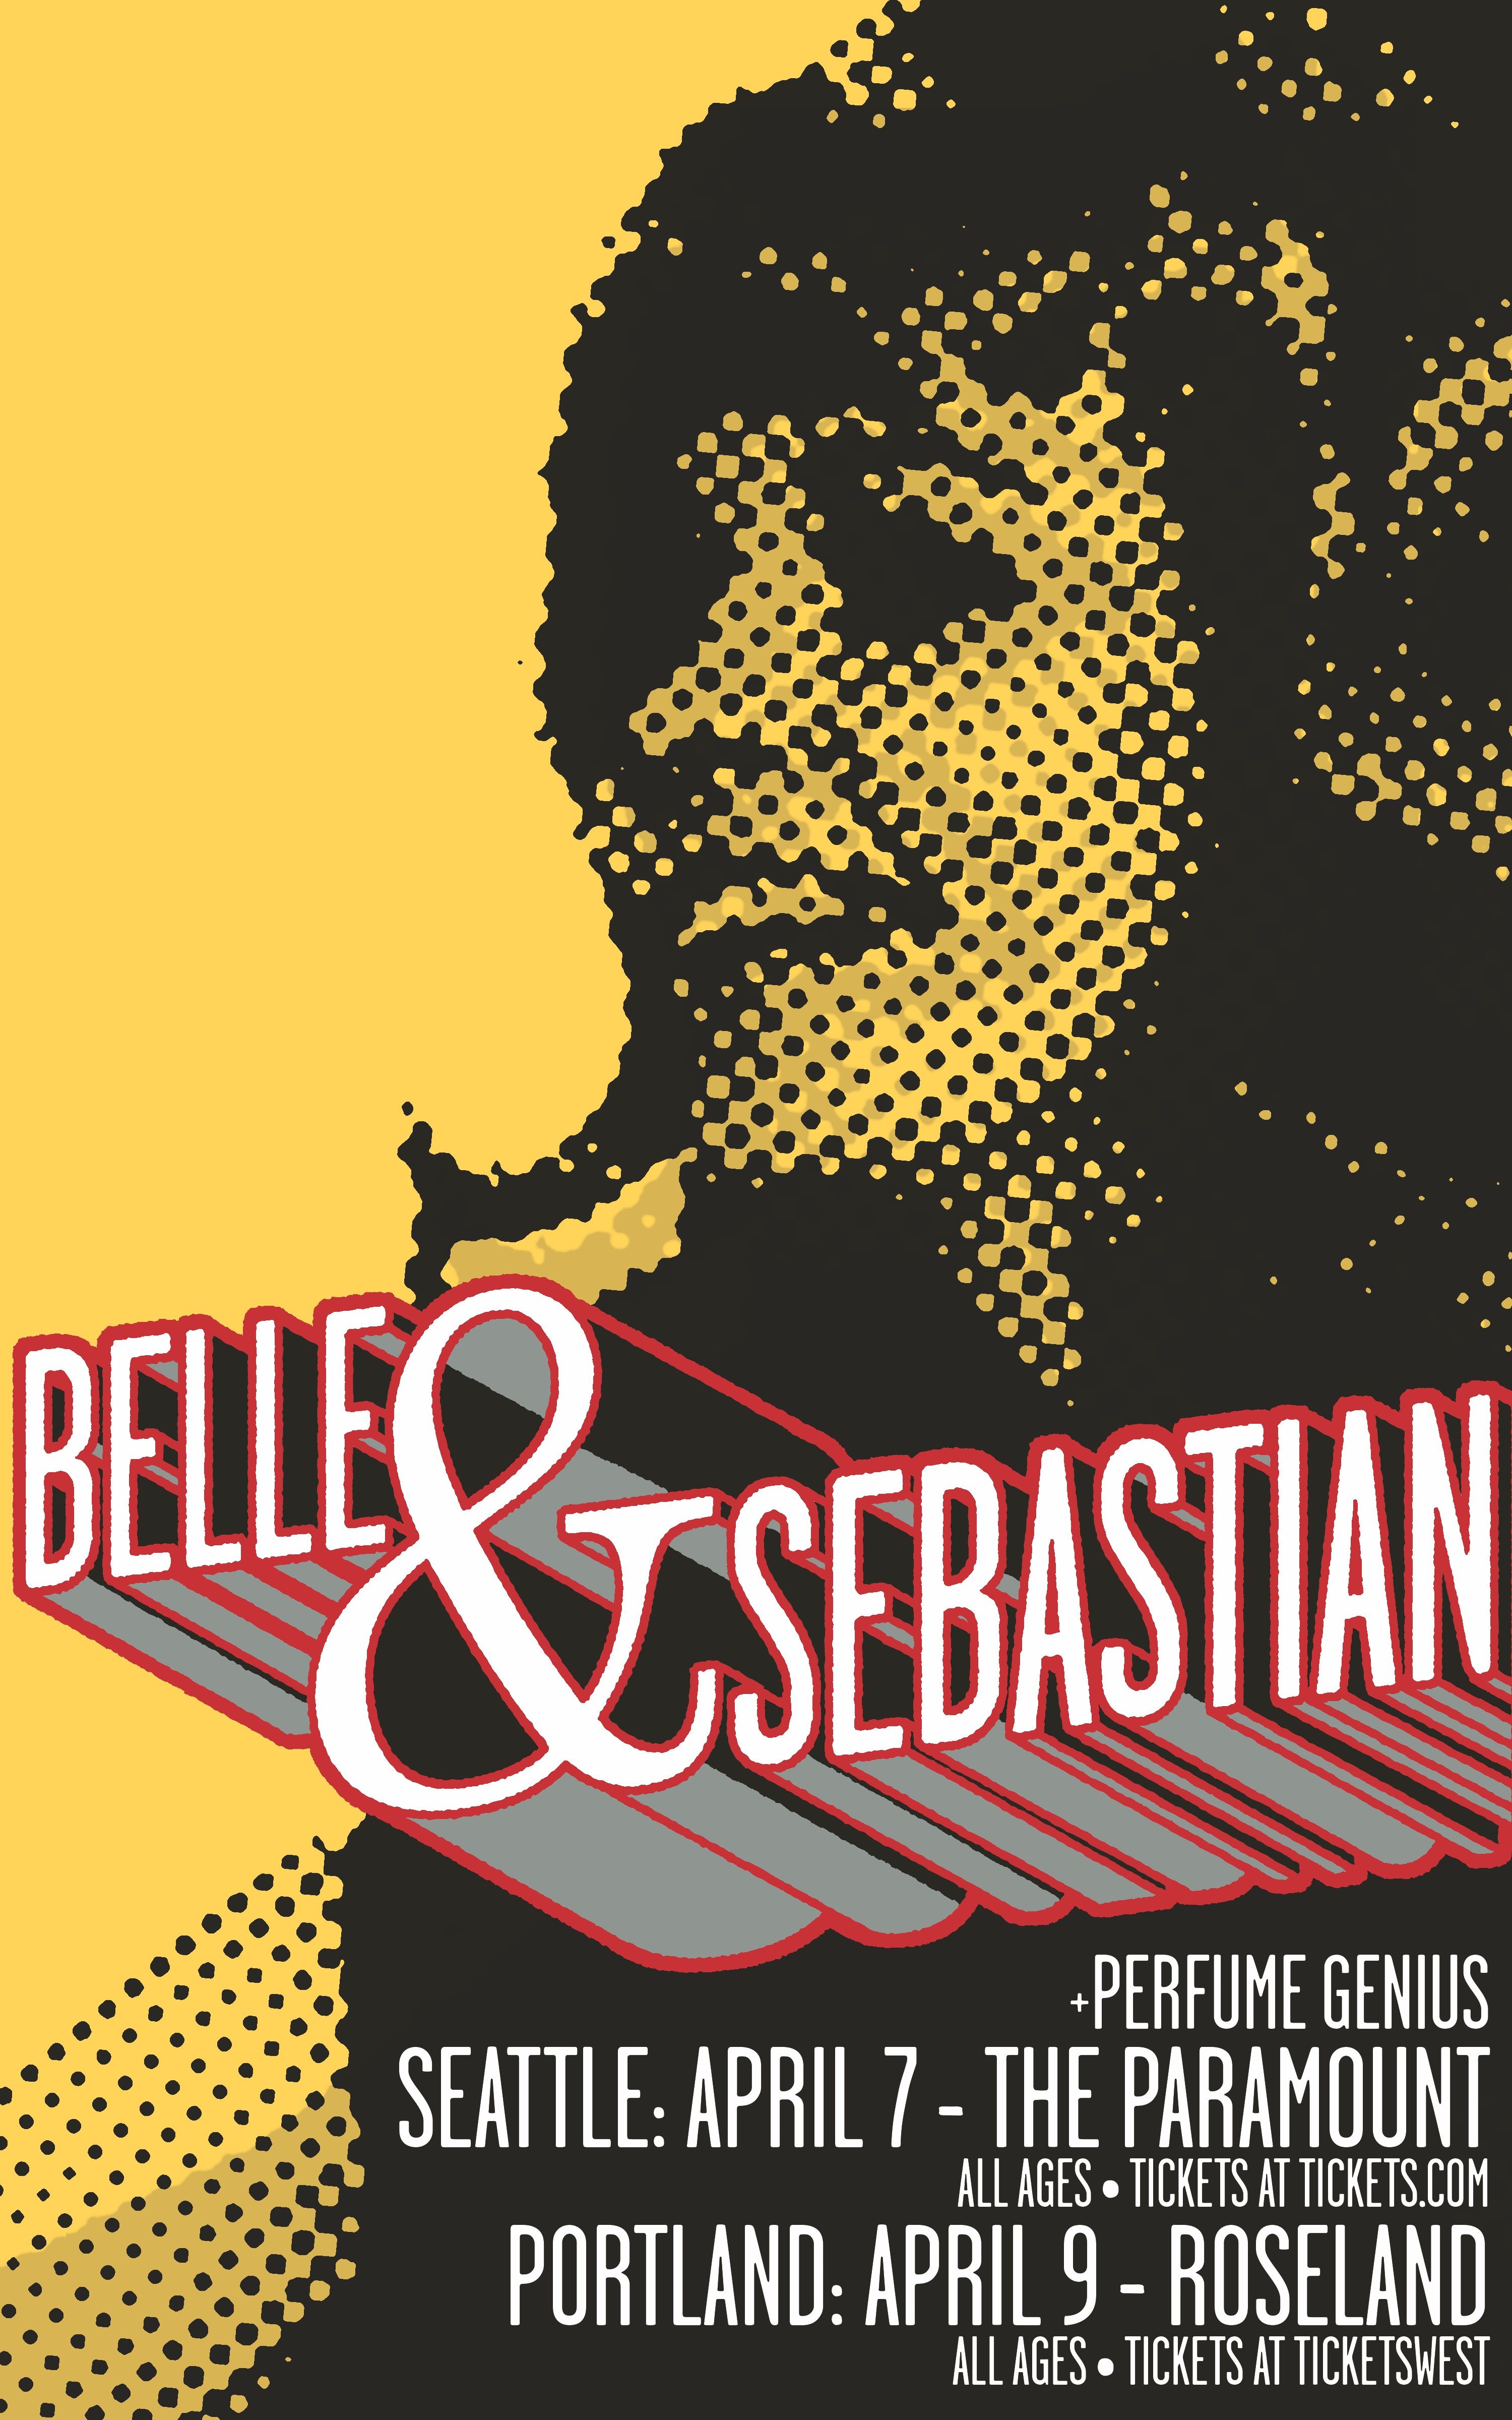 MXP-70.1 Belle & Sebastian 2015 Paramount Theatre/rosland Theater  Apr 9 Concert Poster